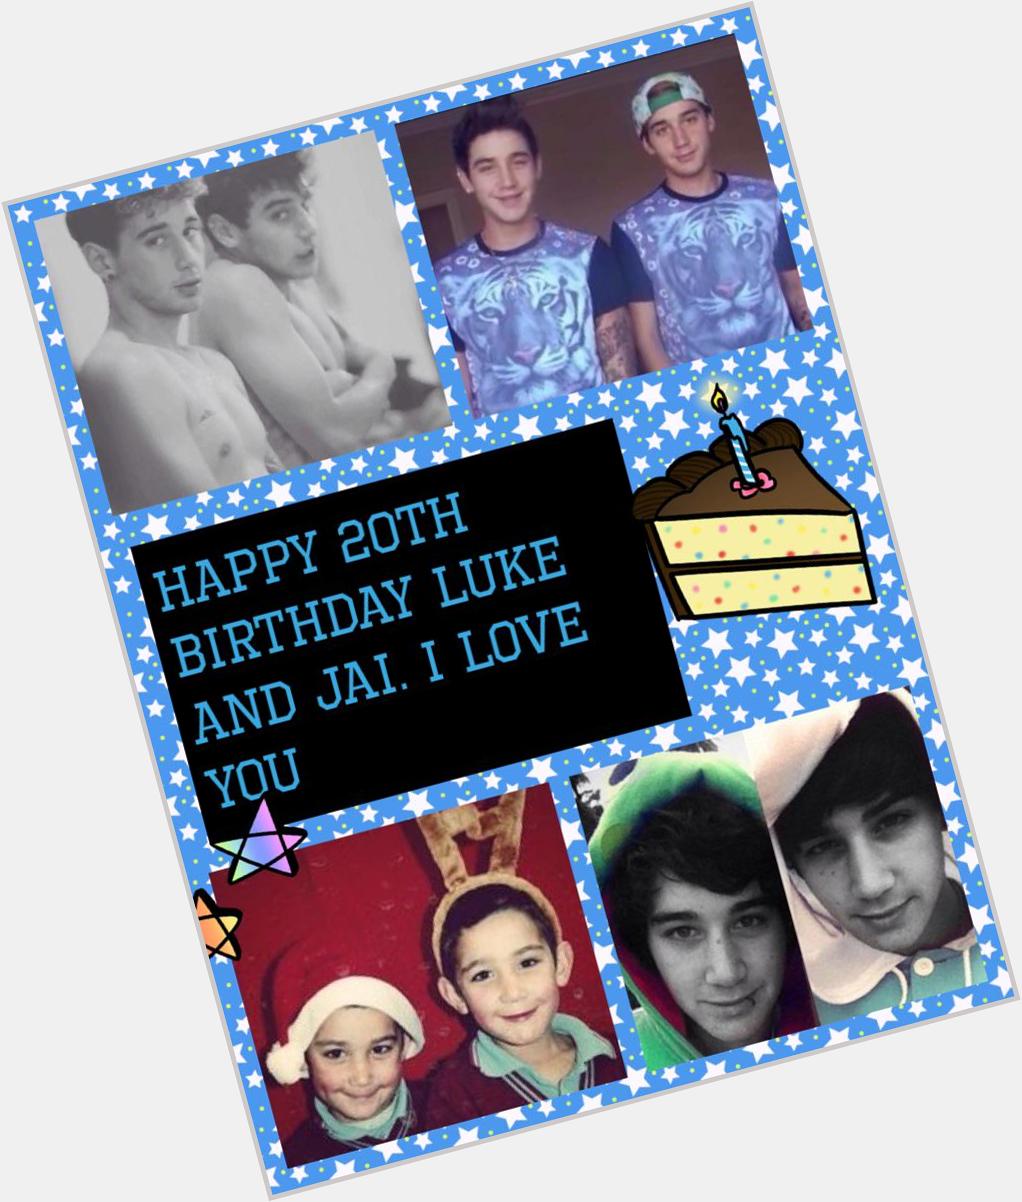 Happy 20th birthday Luke and Jai. I love you   